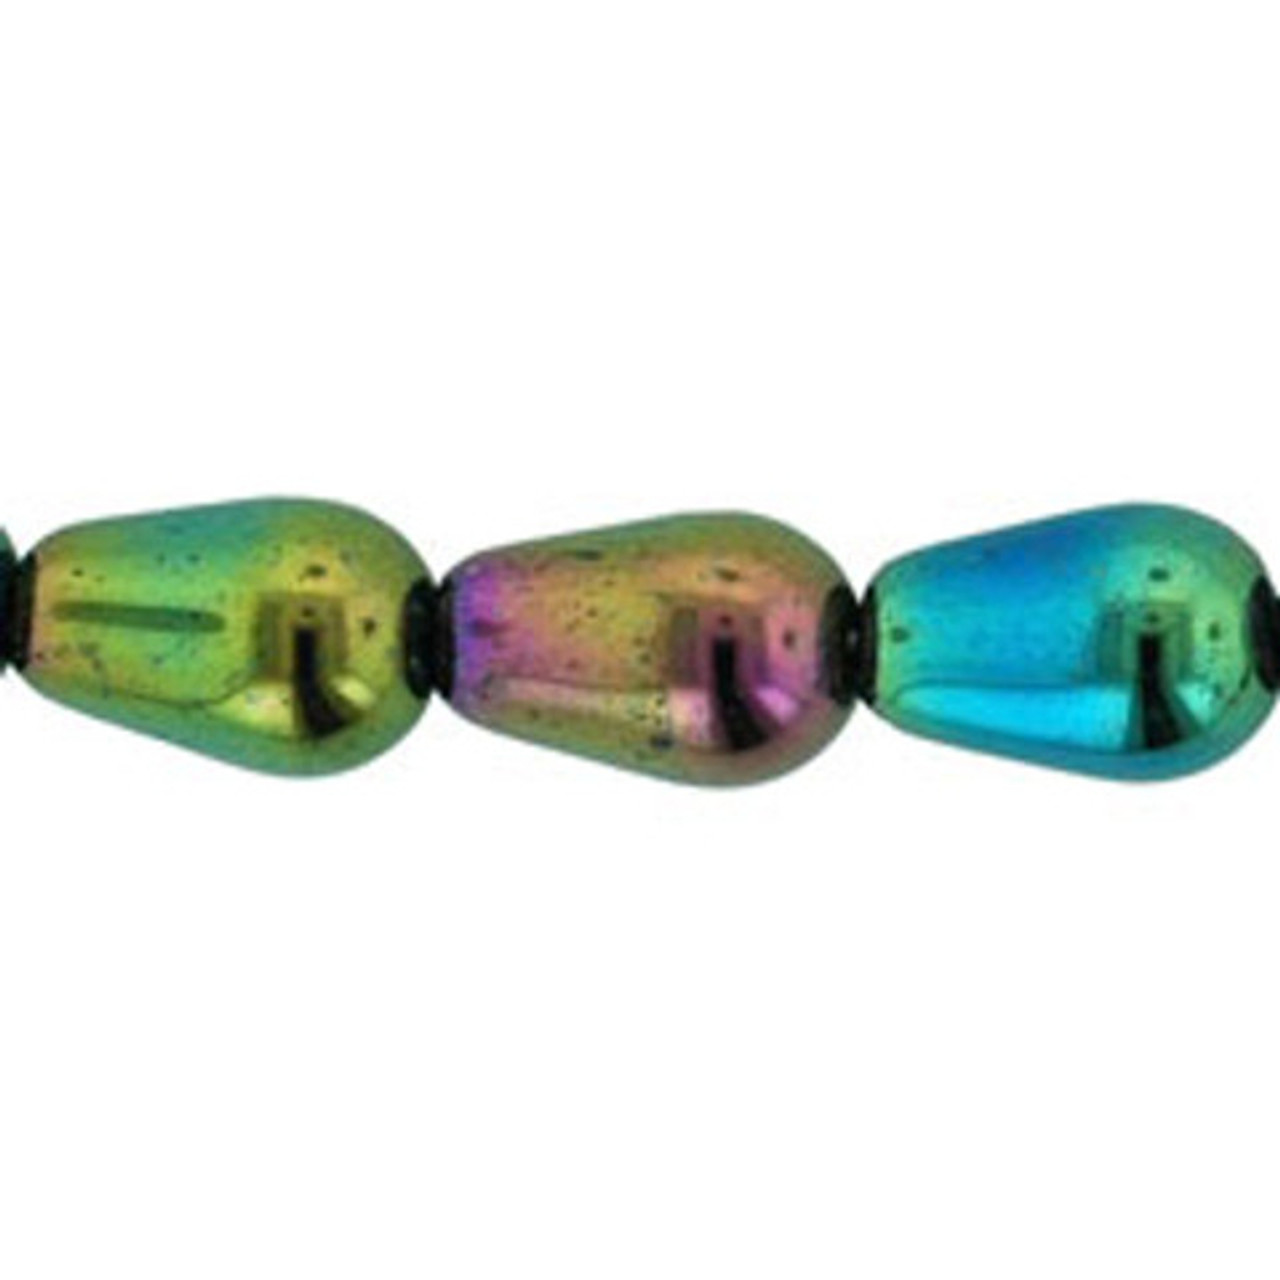 Czech glass teardrop beads 30pc Lumi purple luster 9x6mm – Orange Grove  Beads